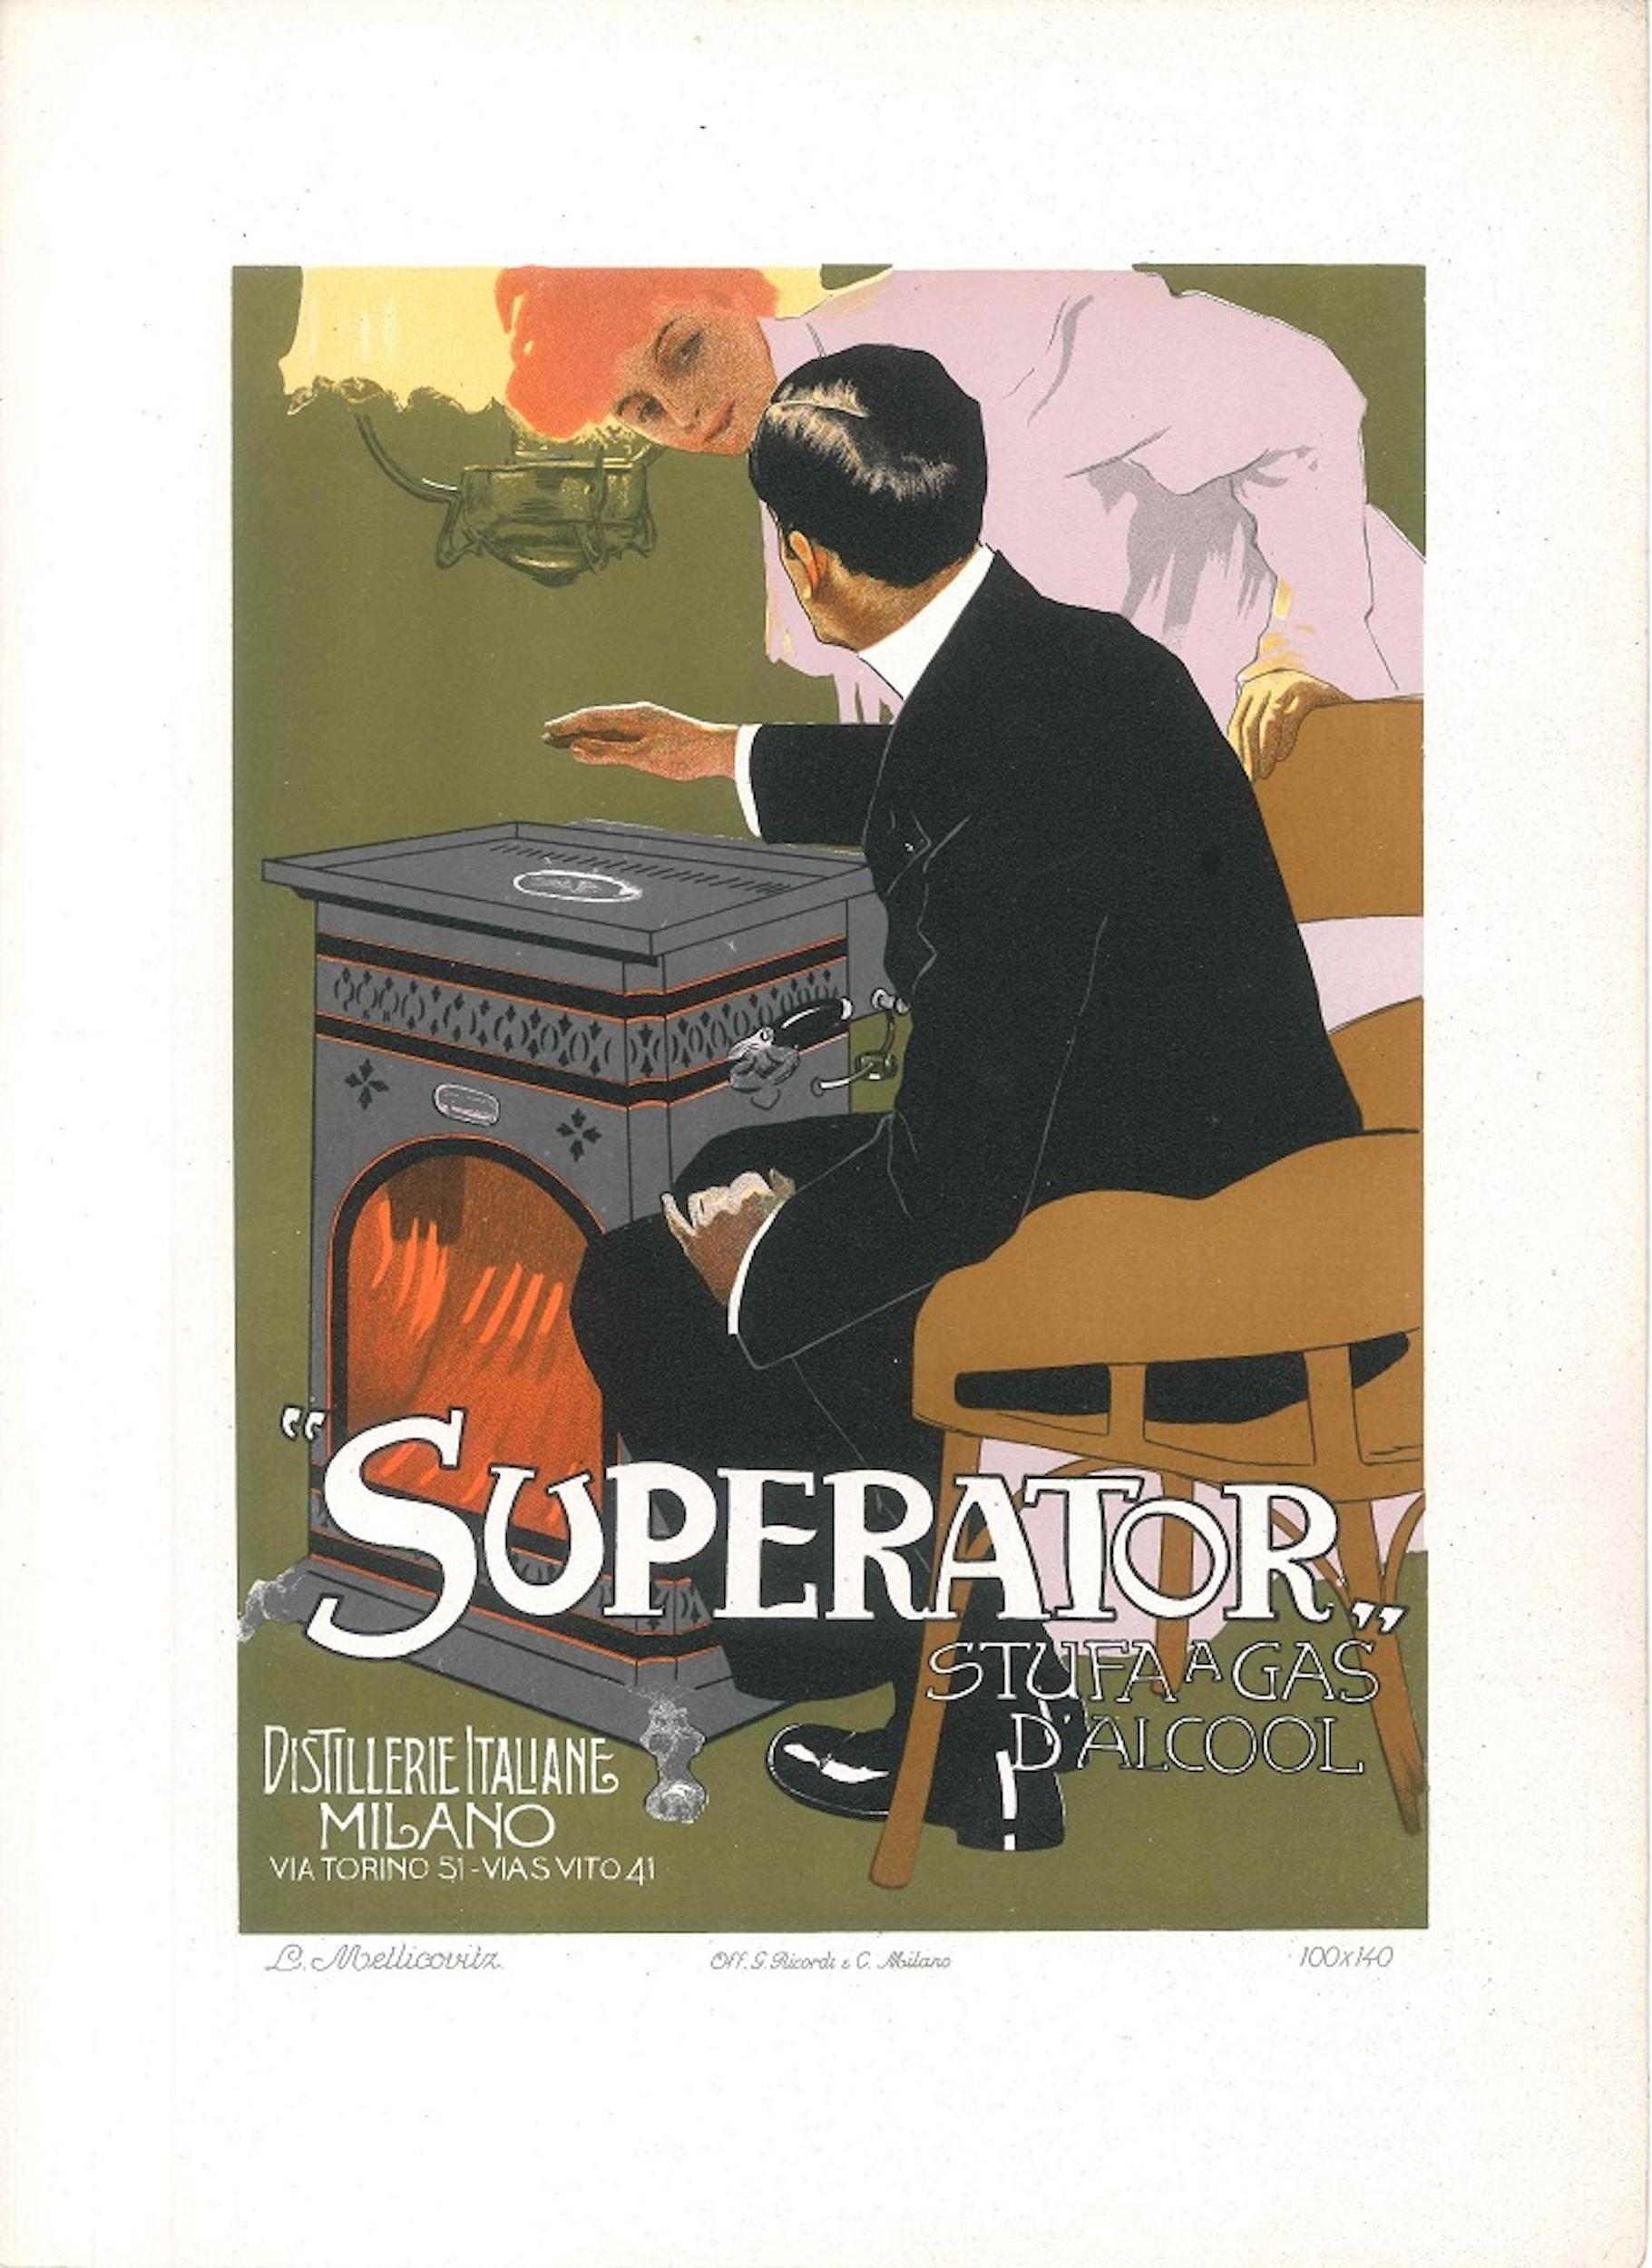 Superato - Vintage Adv Lithograph by L. Metlicovitz - 1914 - Print by Leopoldo Metlicovitz